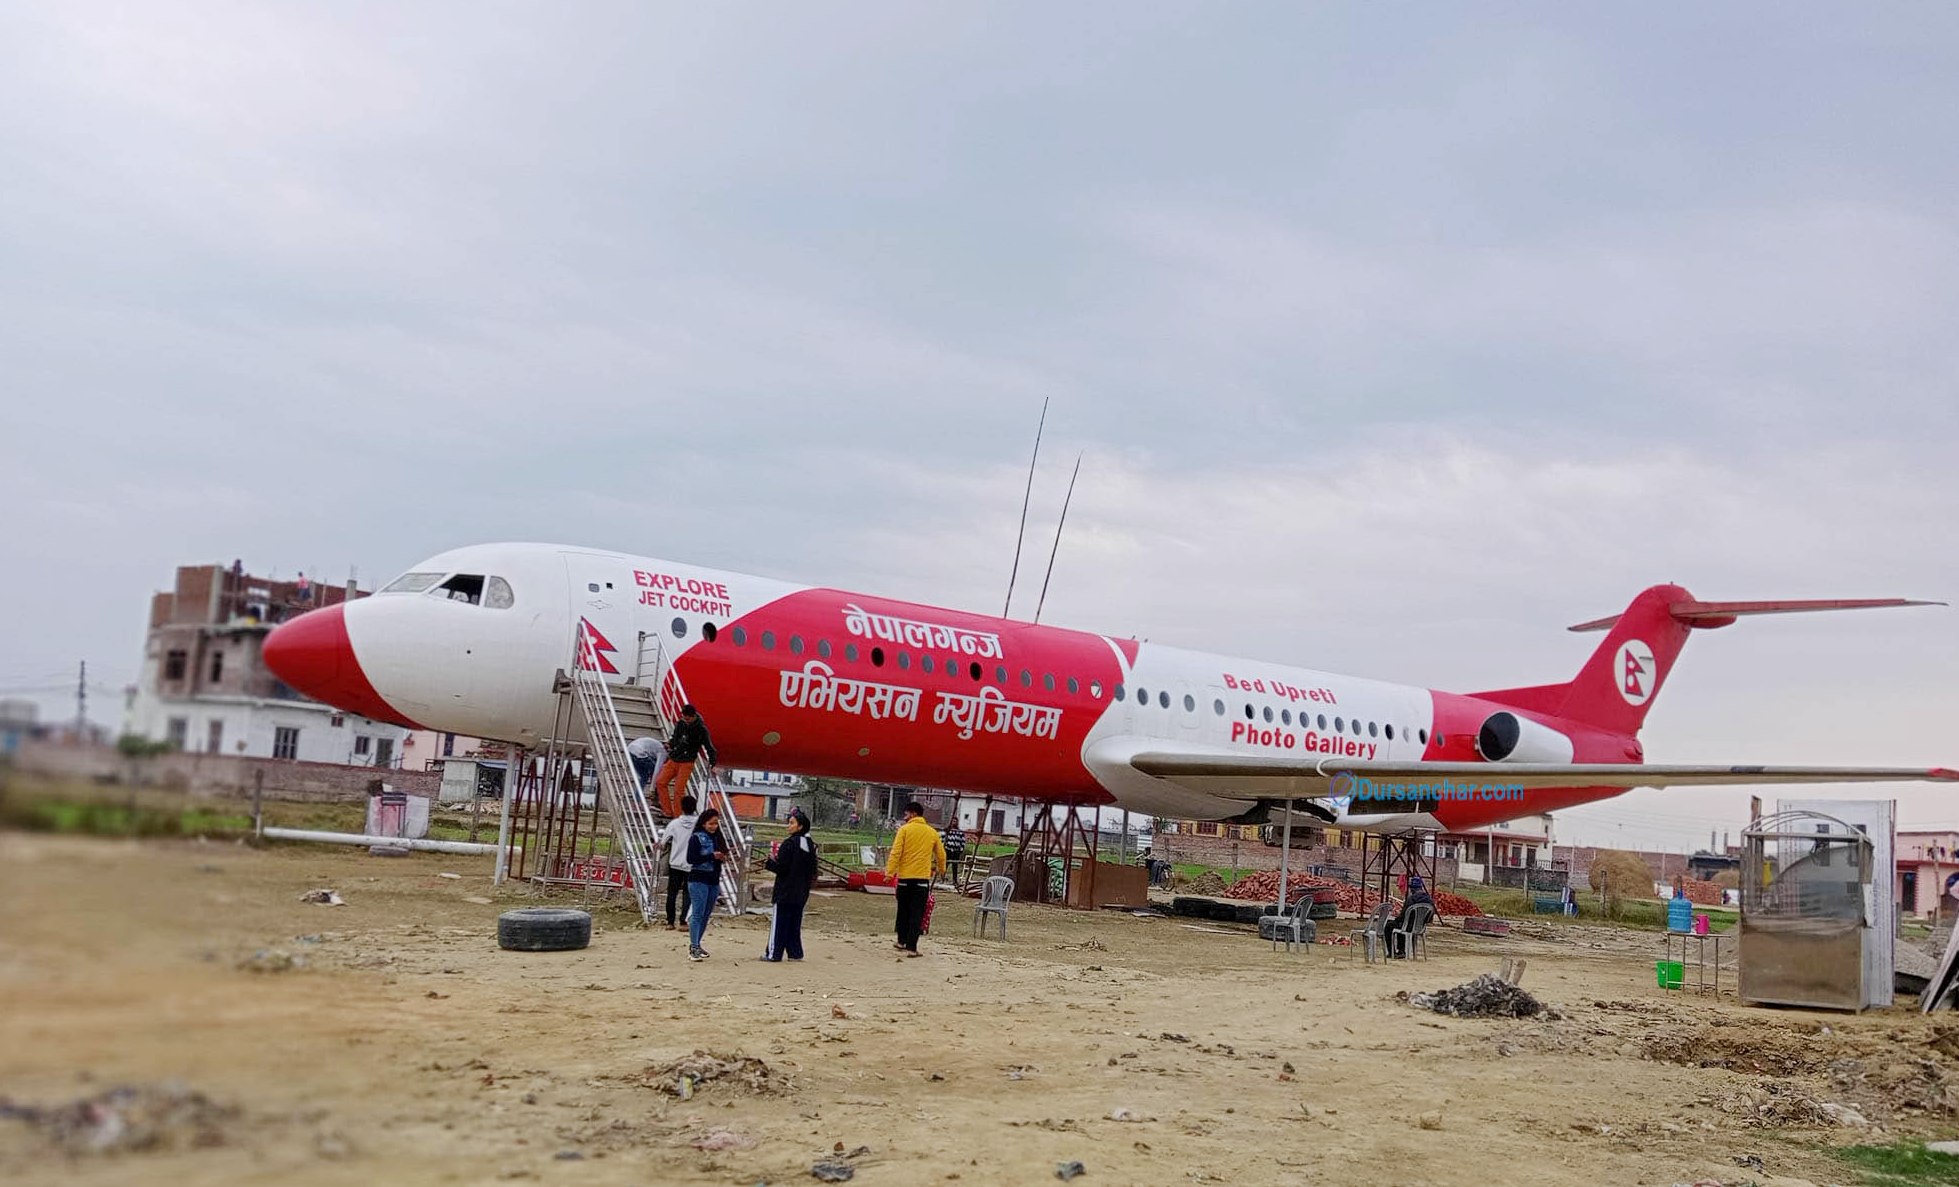 aviation-museum-comes-into-operation-in-nepalgunj